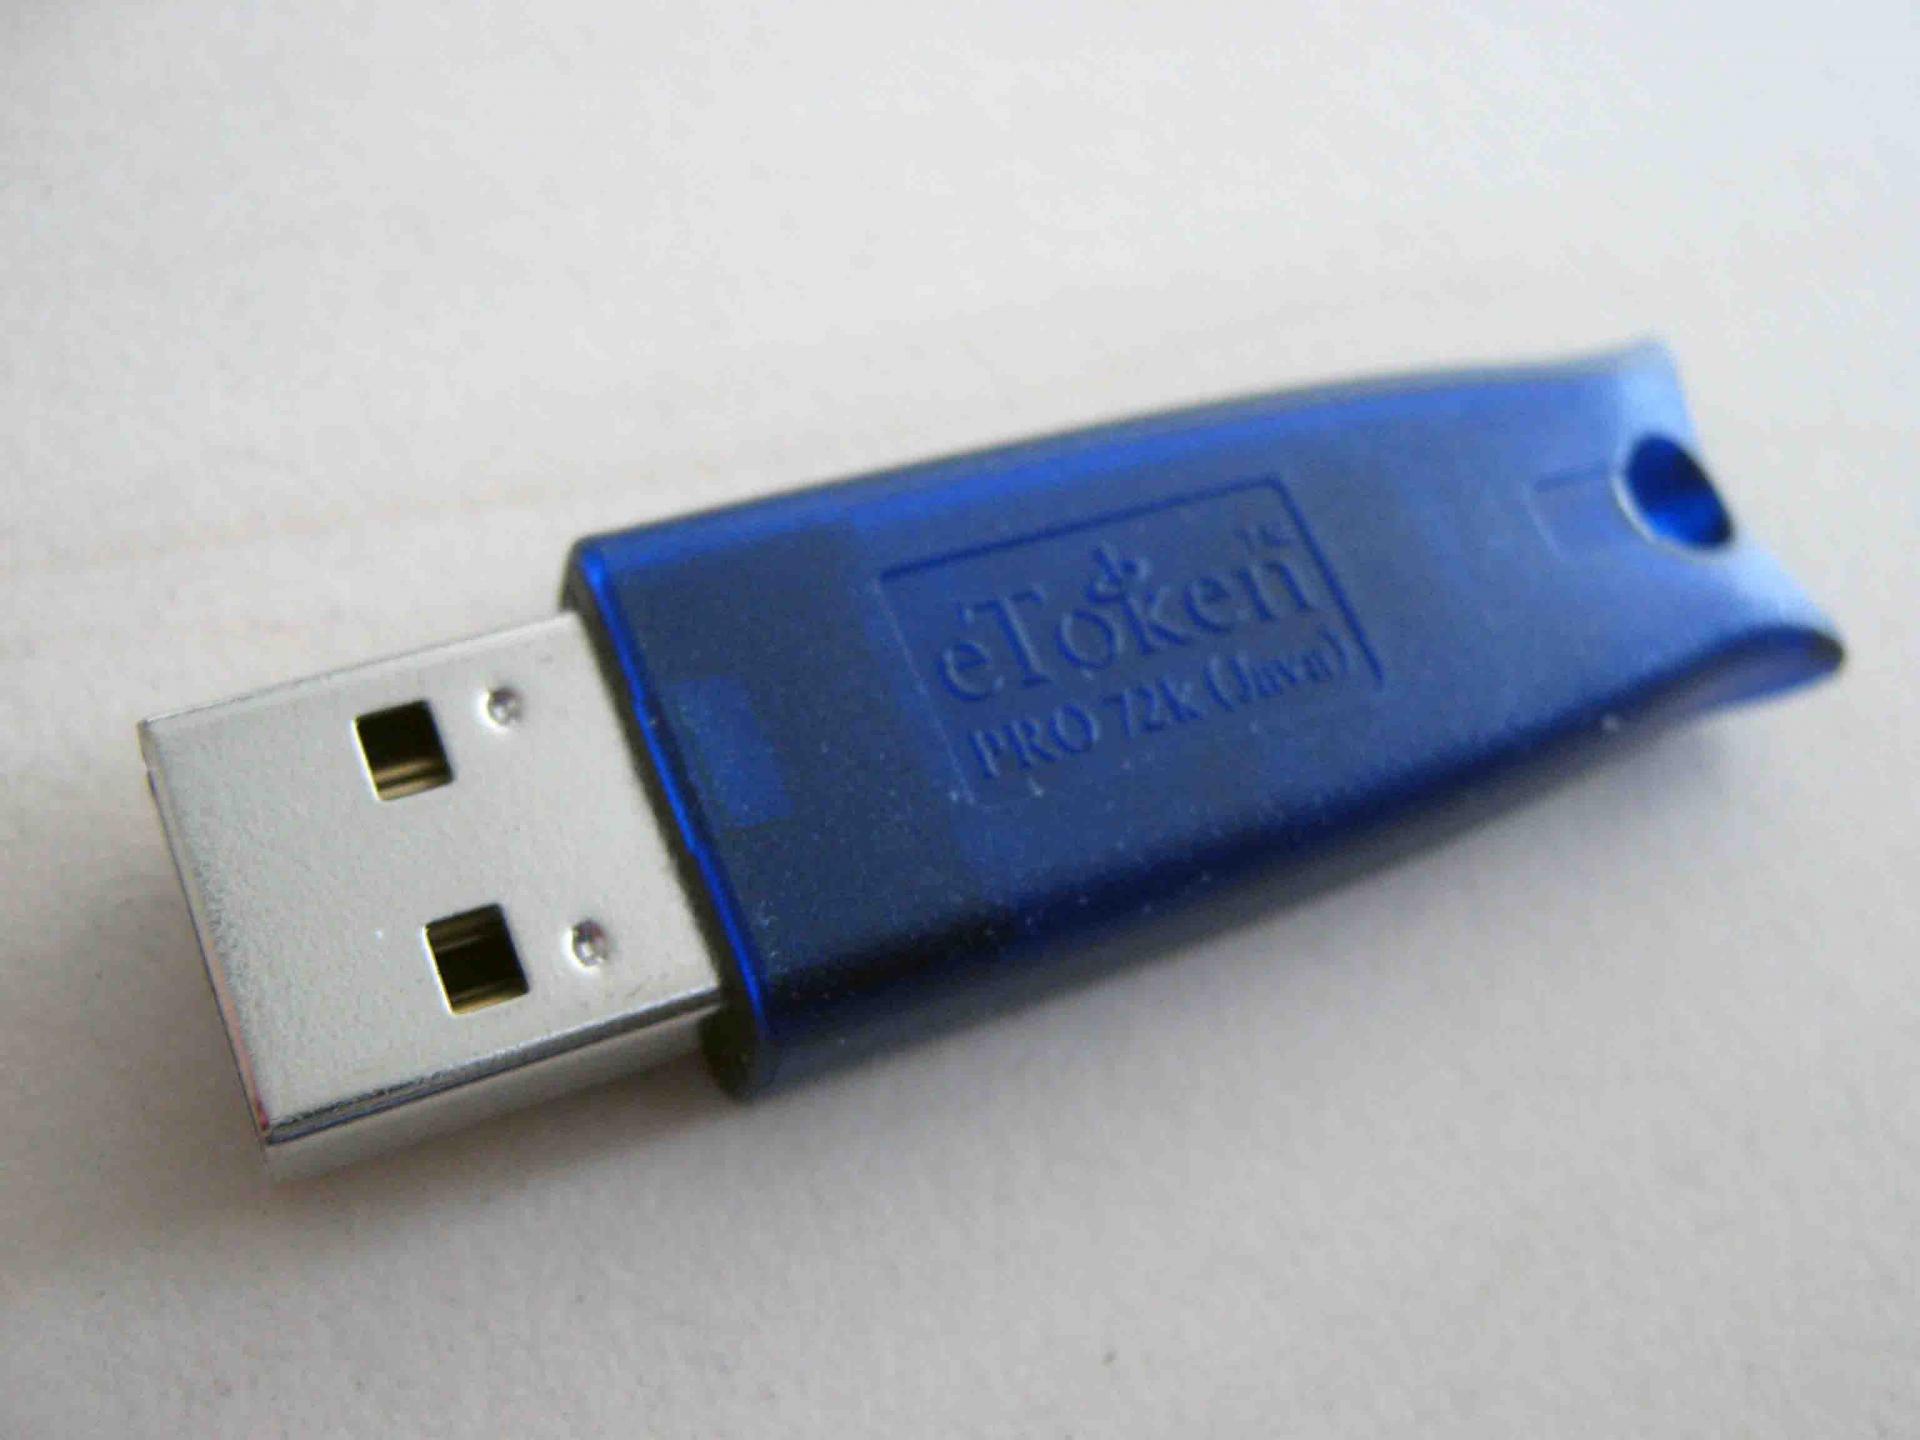 Электронные ключи сайт. USB-ключ ETOKEN Pro (java), 72кб. ETOKEN e0231b113. ETOKEN 5205. USB-ключ ETOKEN Pro алладин.